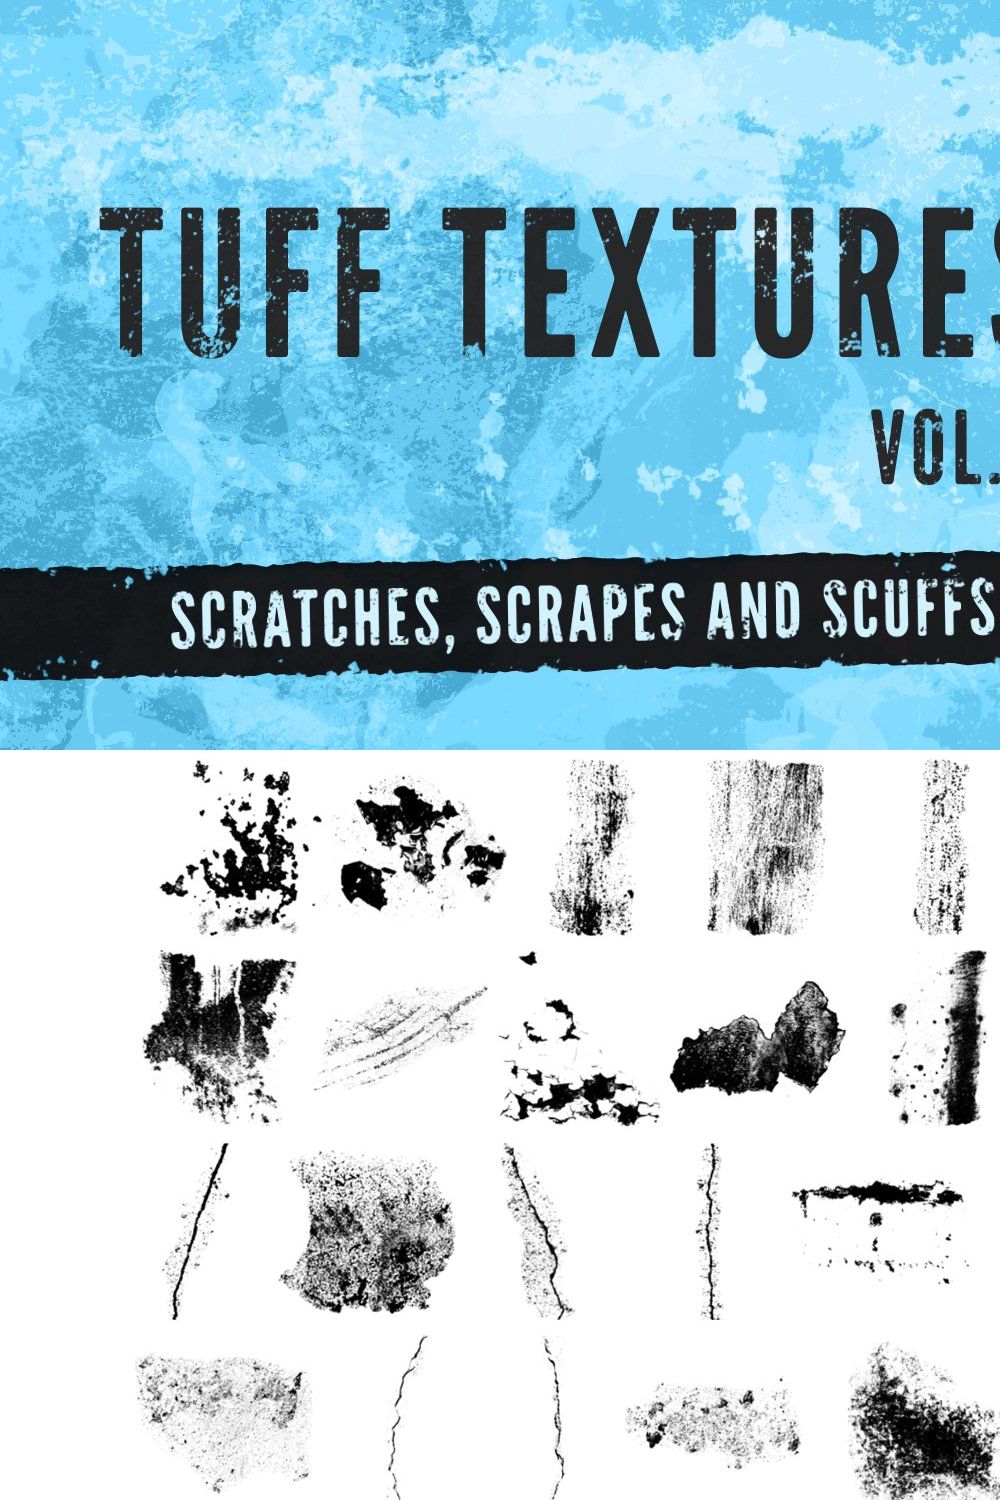 Tuff Textures Vol. 4 pinterest preview image.